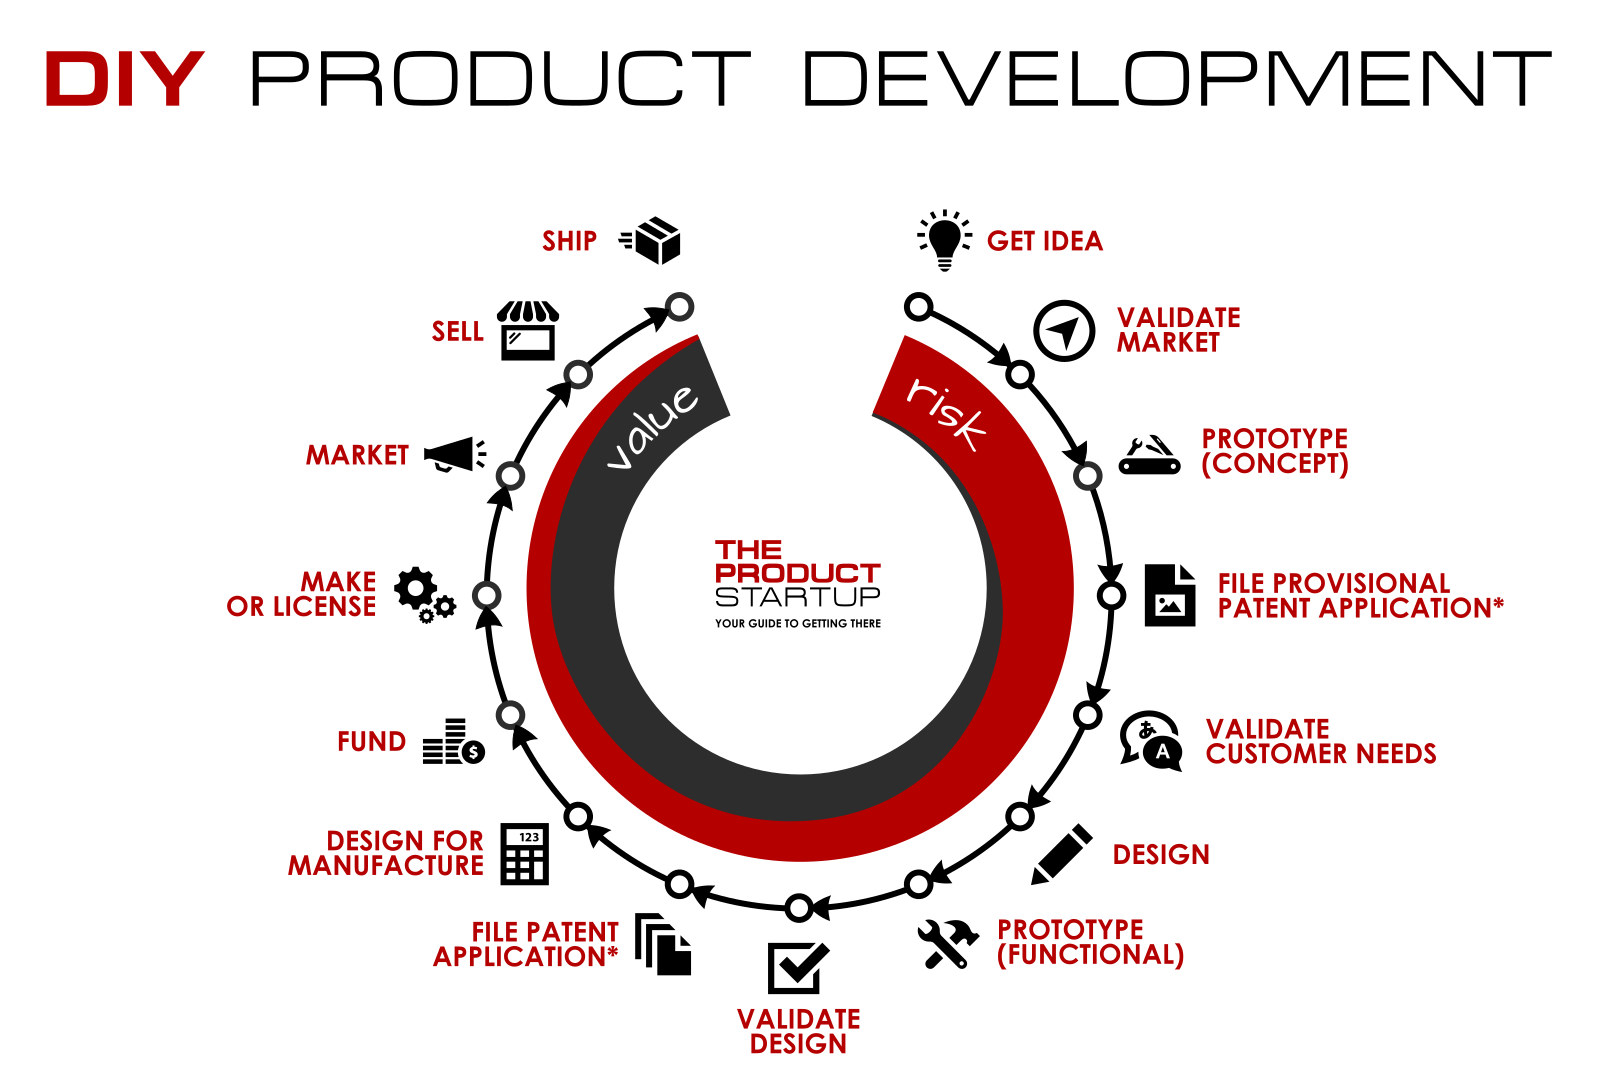 DIY amazon product development cycle